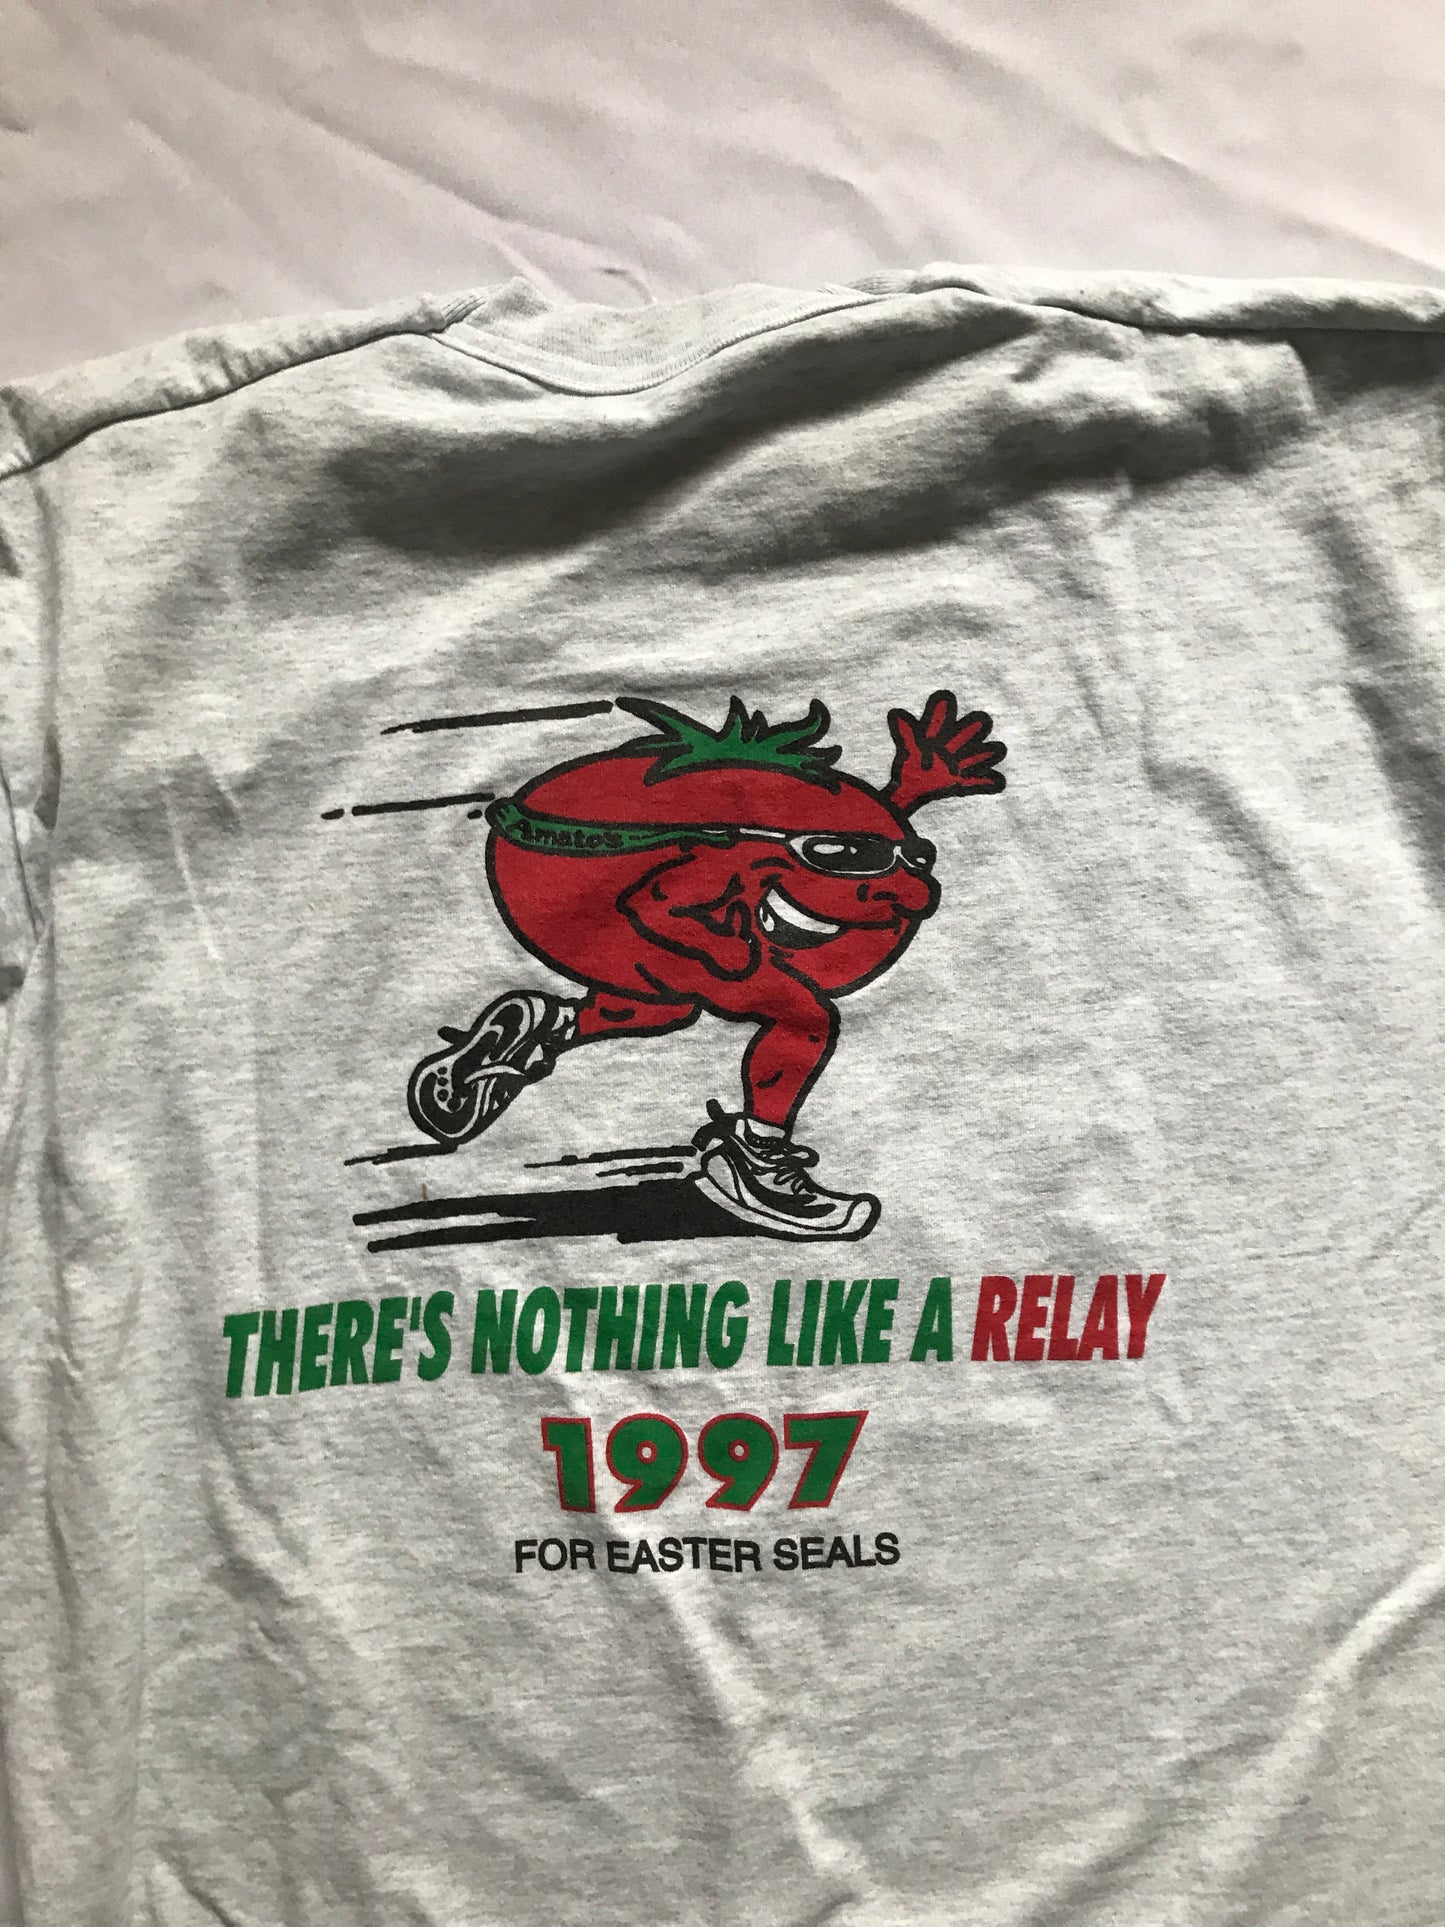 Vintage Tomato T-shirt